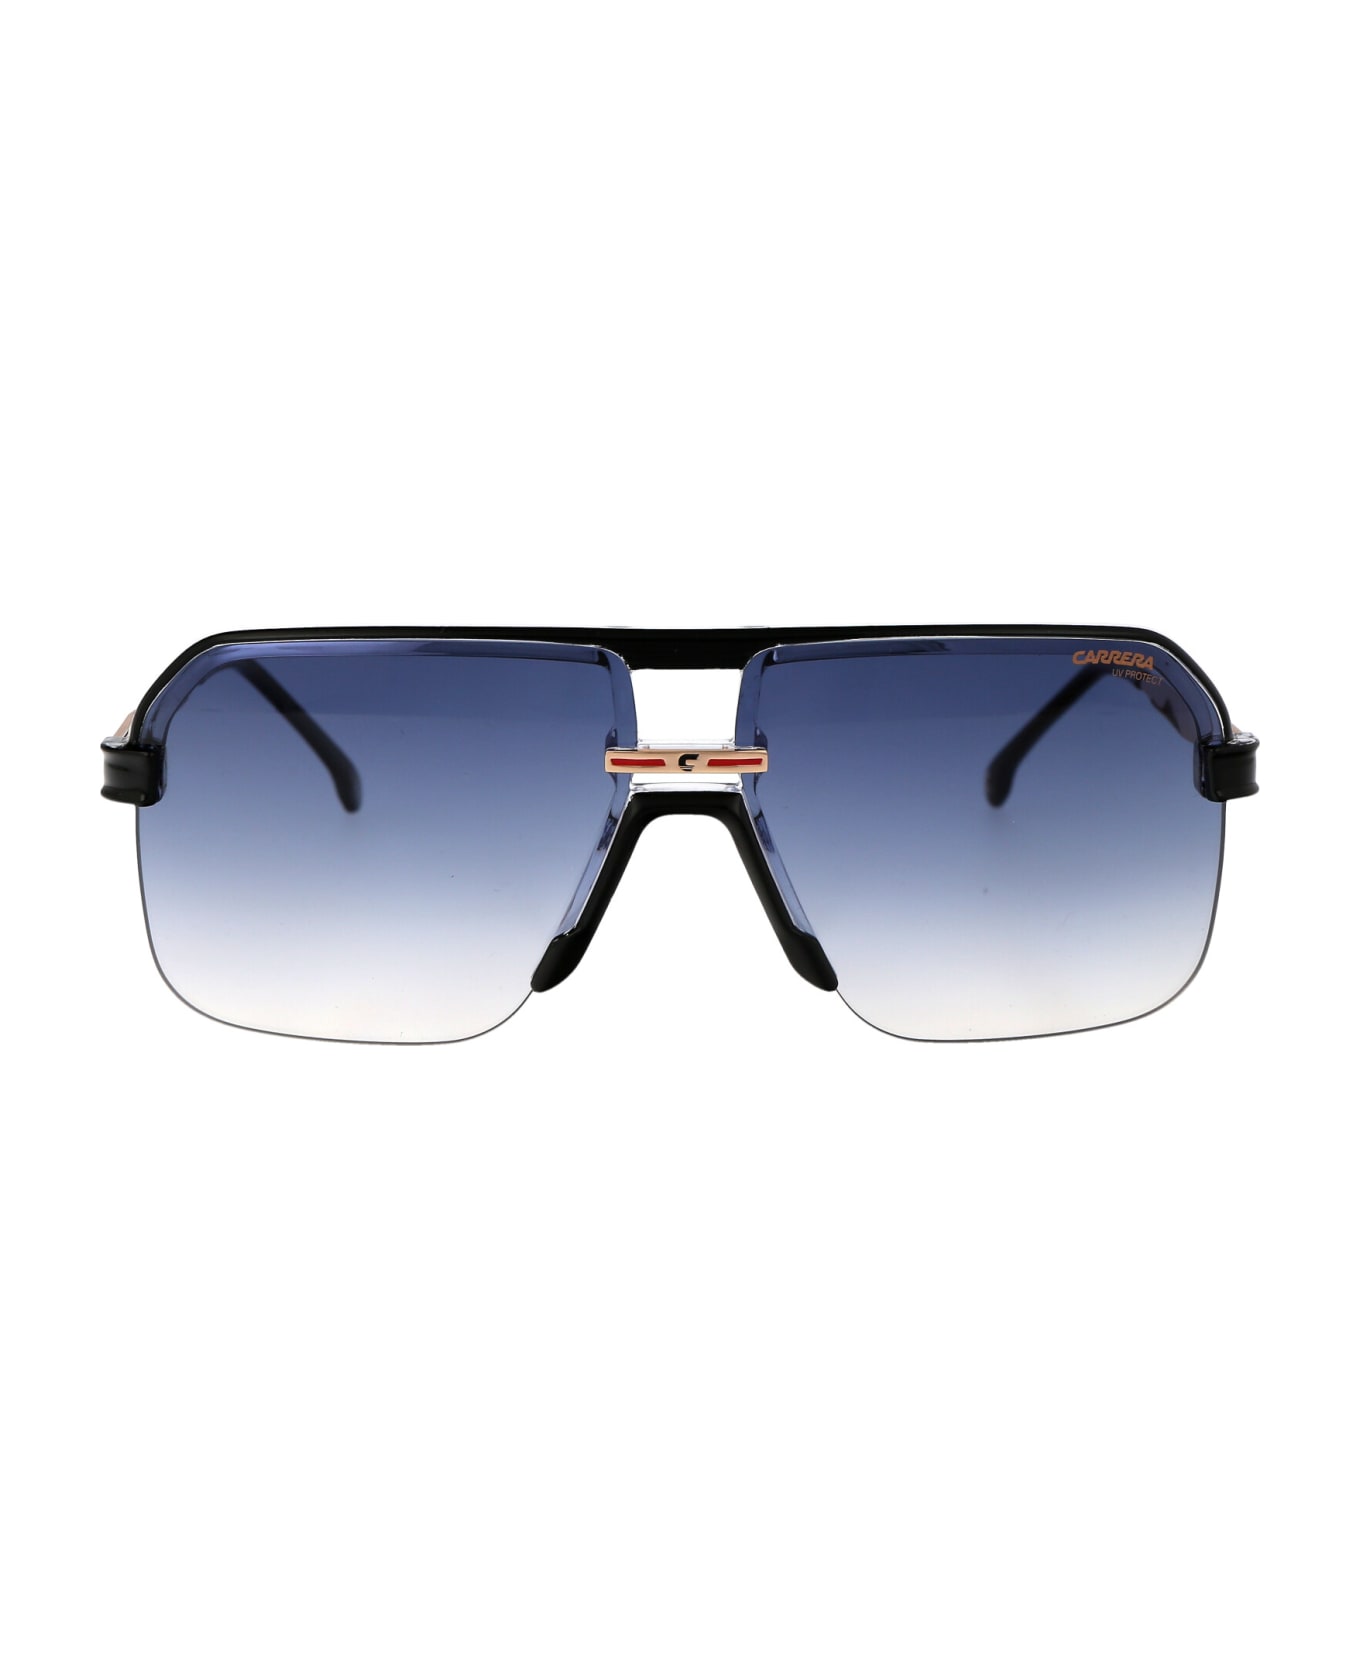 Carrera 1066/s Sunglasses - 7C508 BLACK CRY サングラス